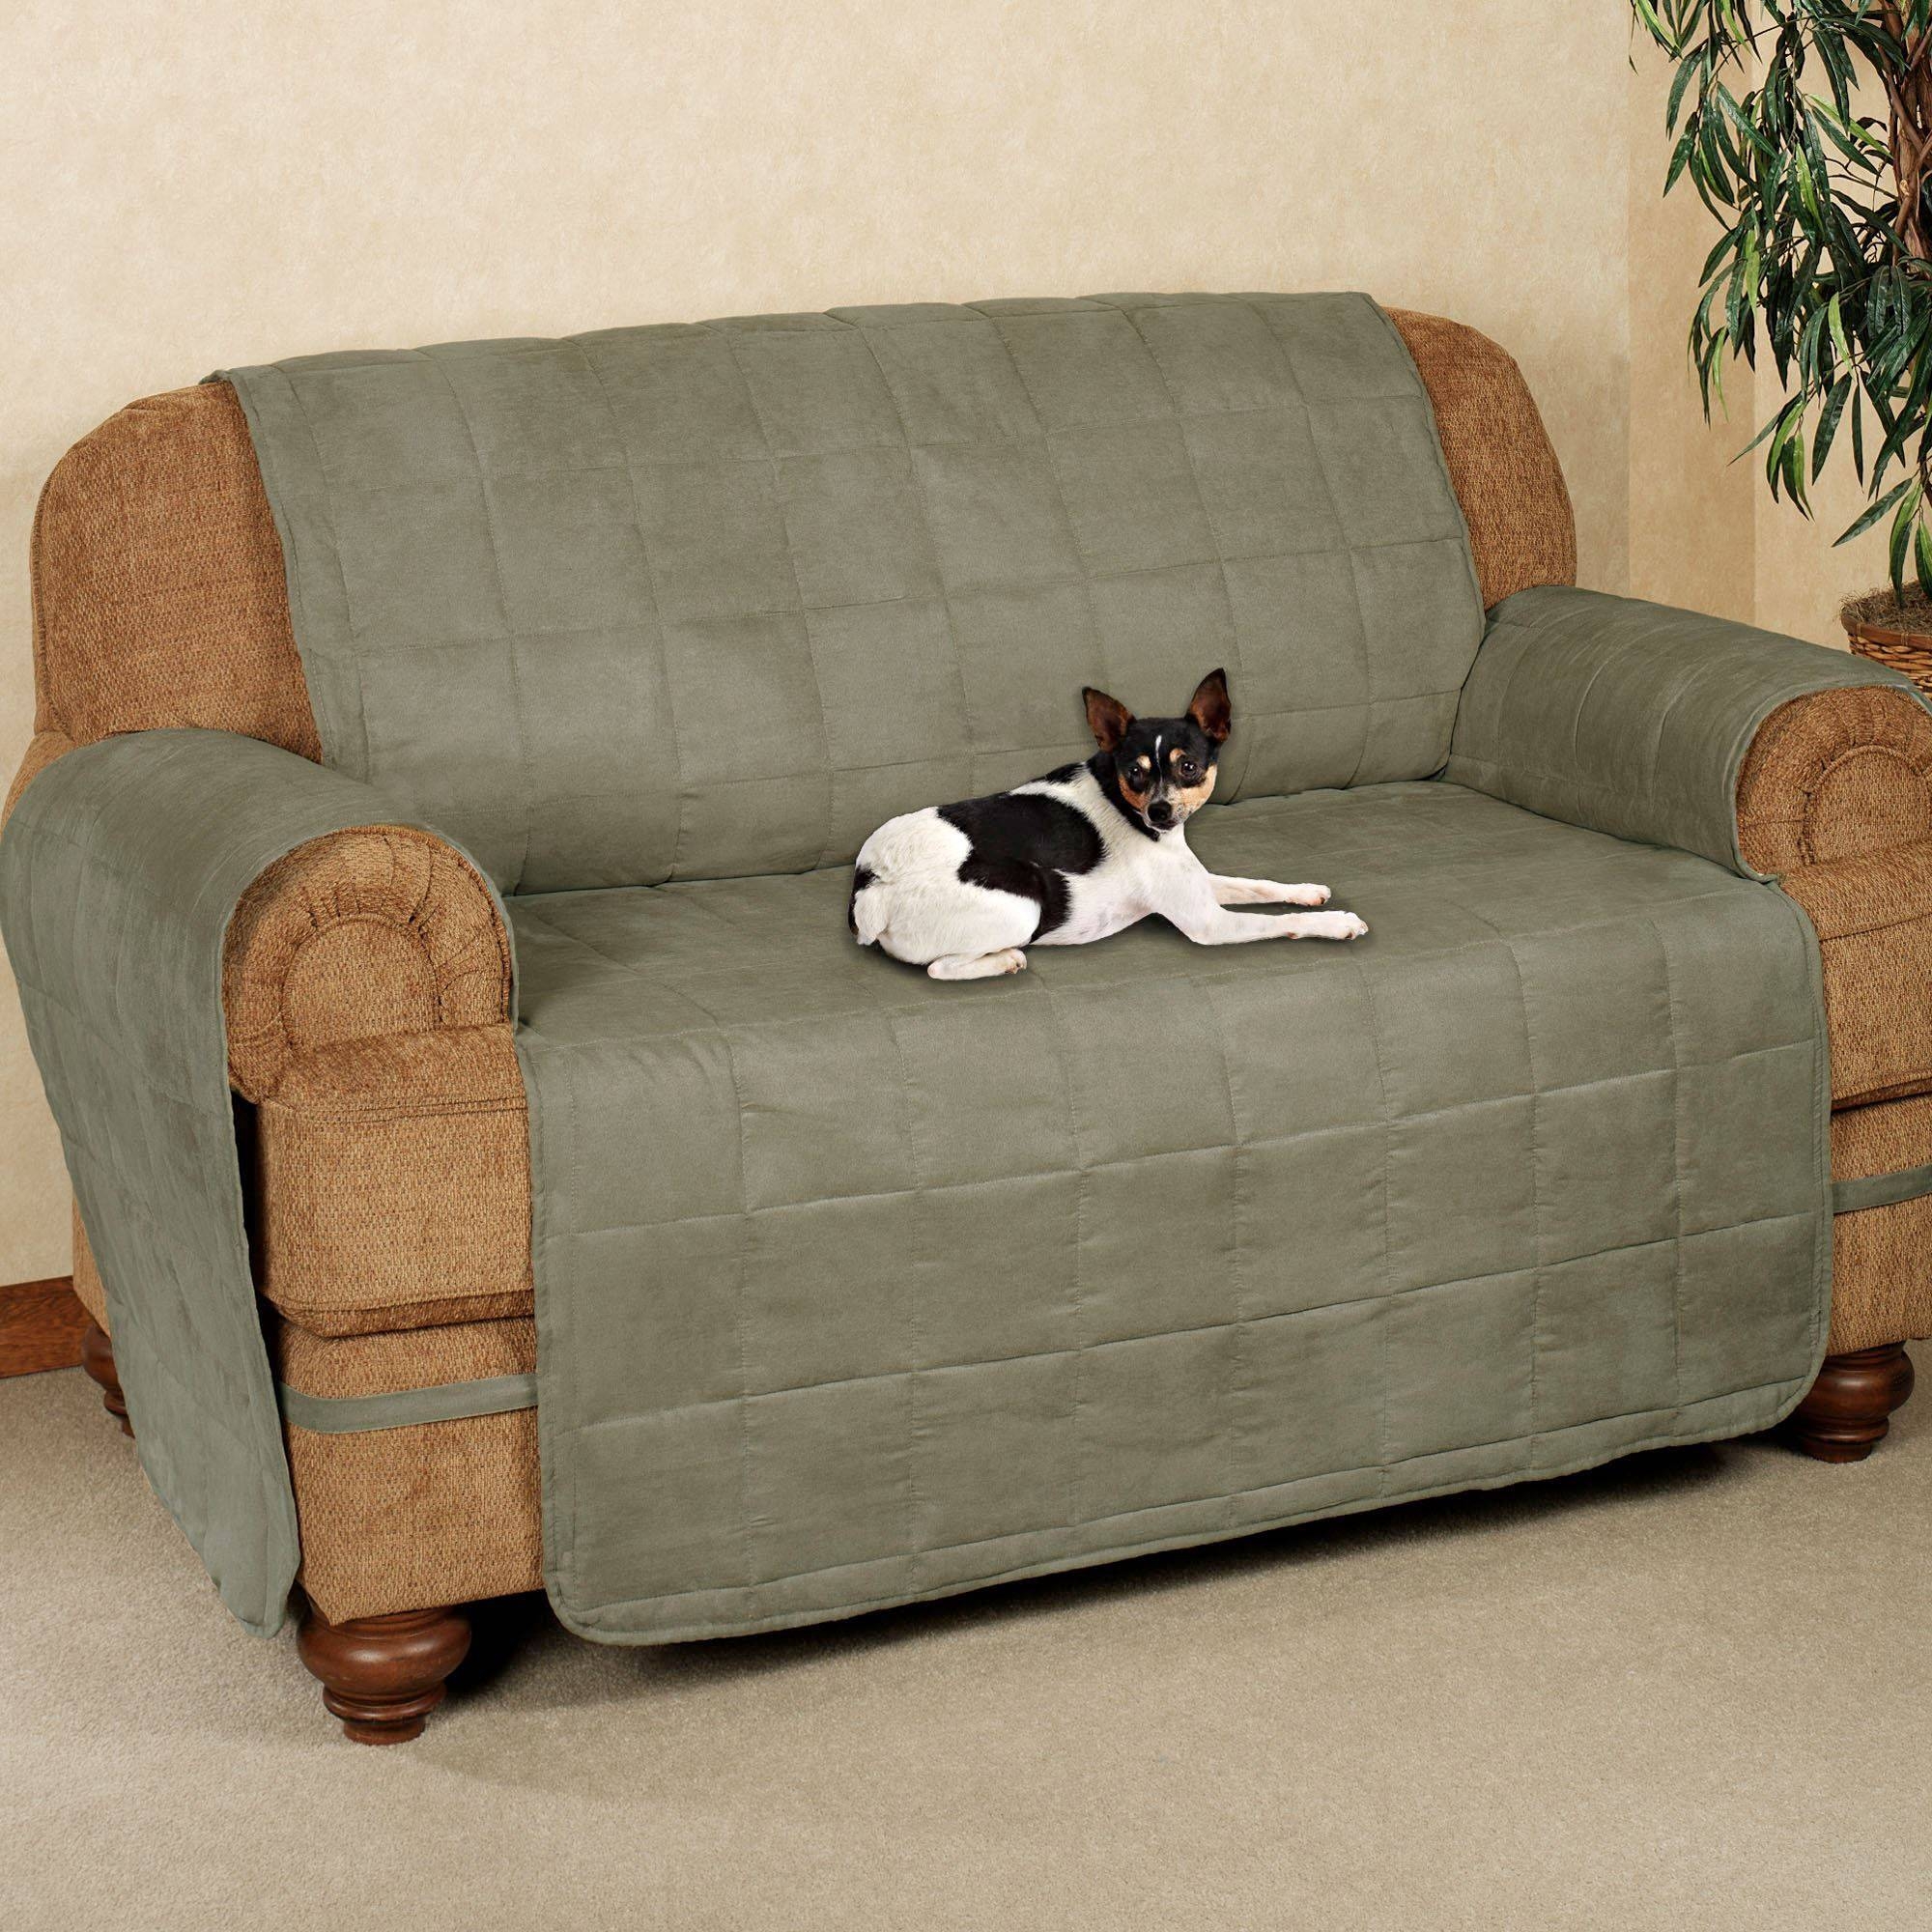 Pet friendly Furniture Options